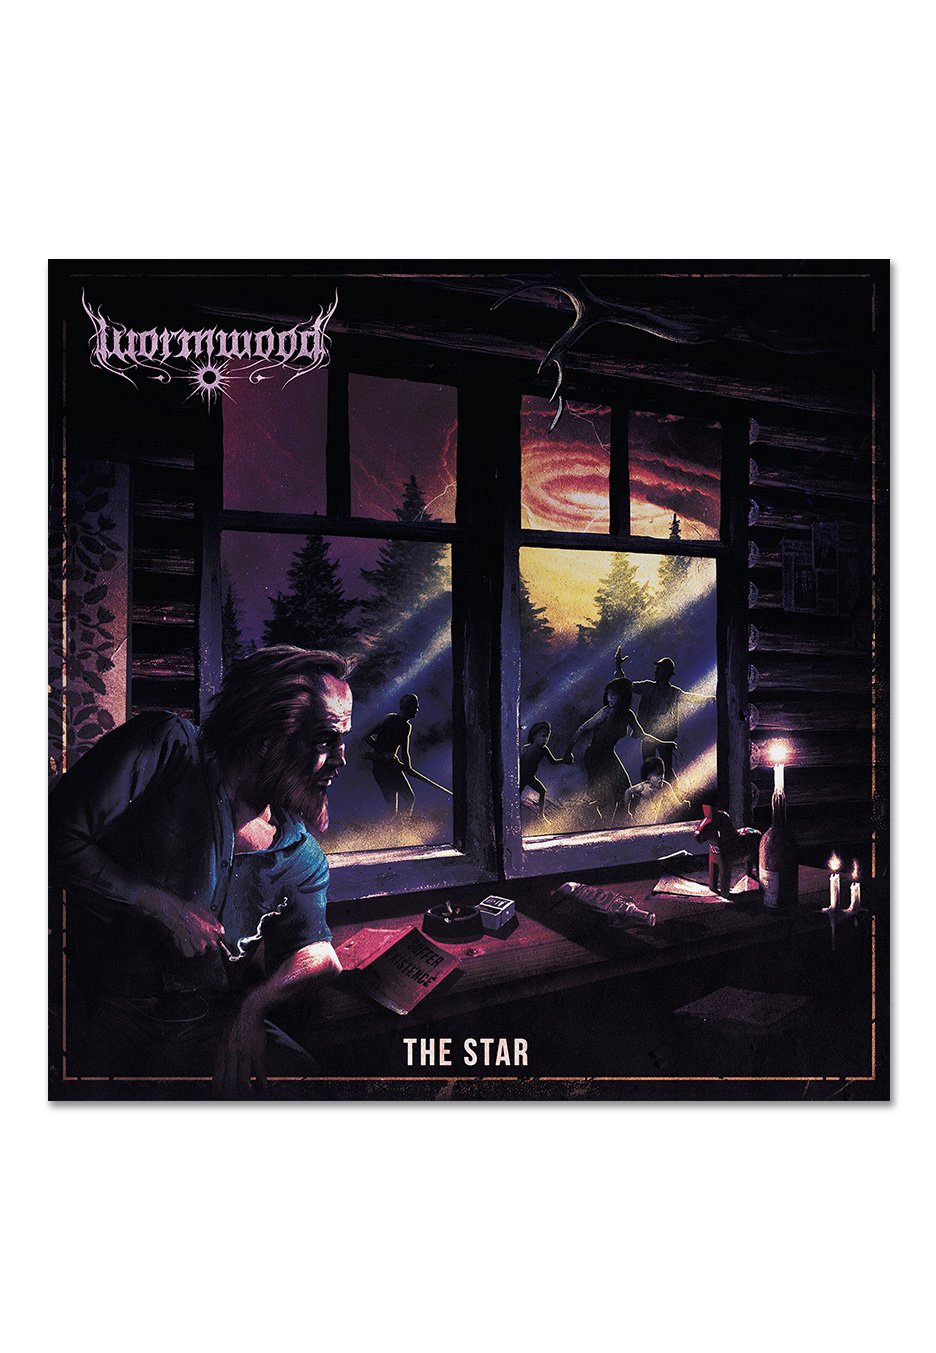 Wormwood - The Star Ltd. Puple - Colored 2 Vinyl